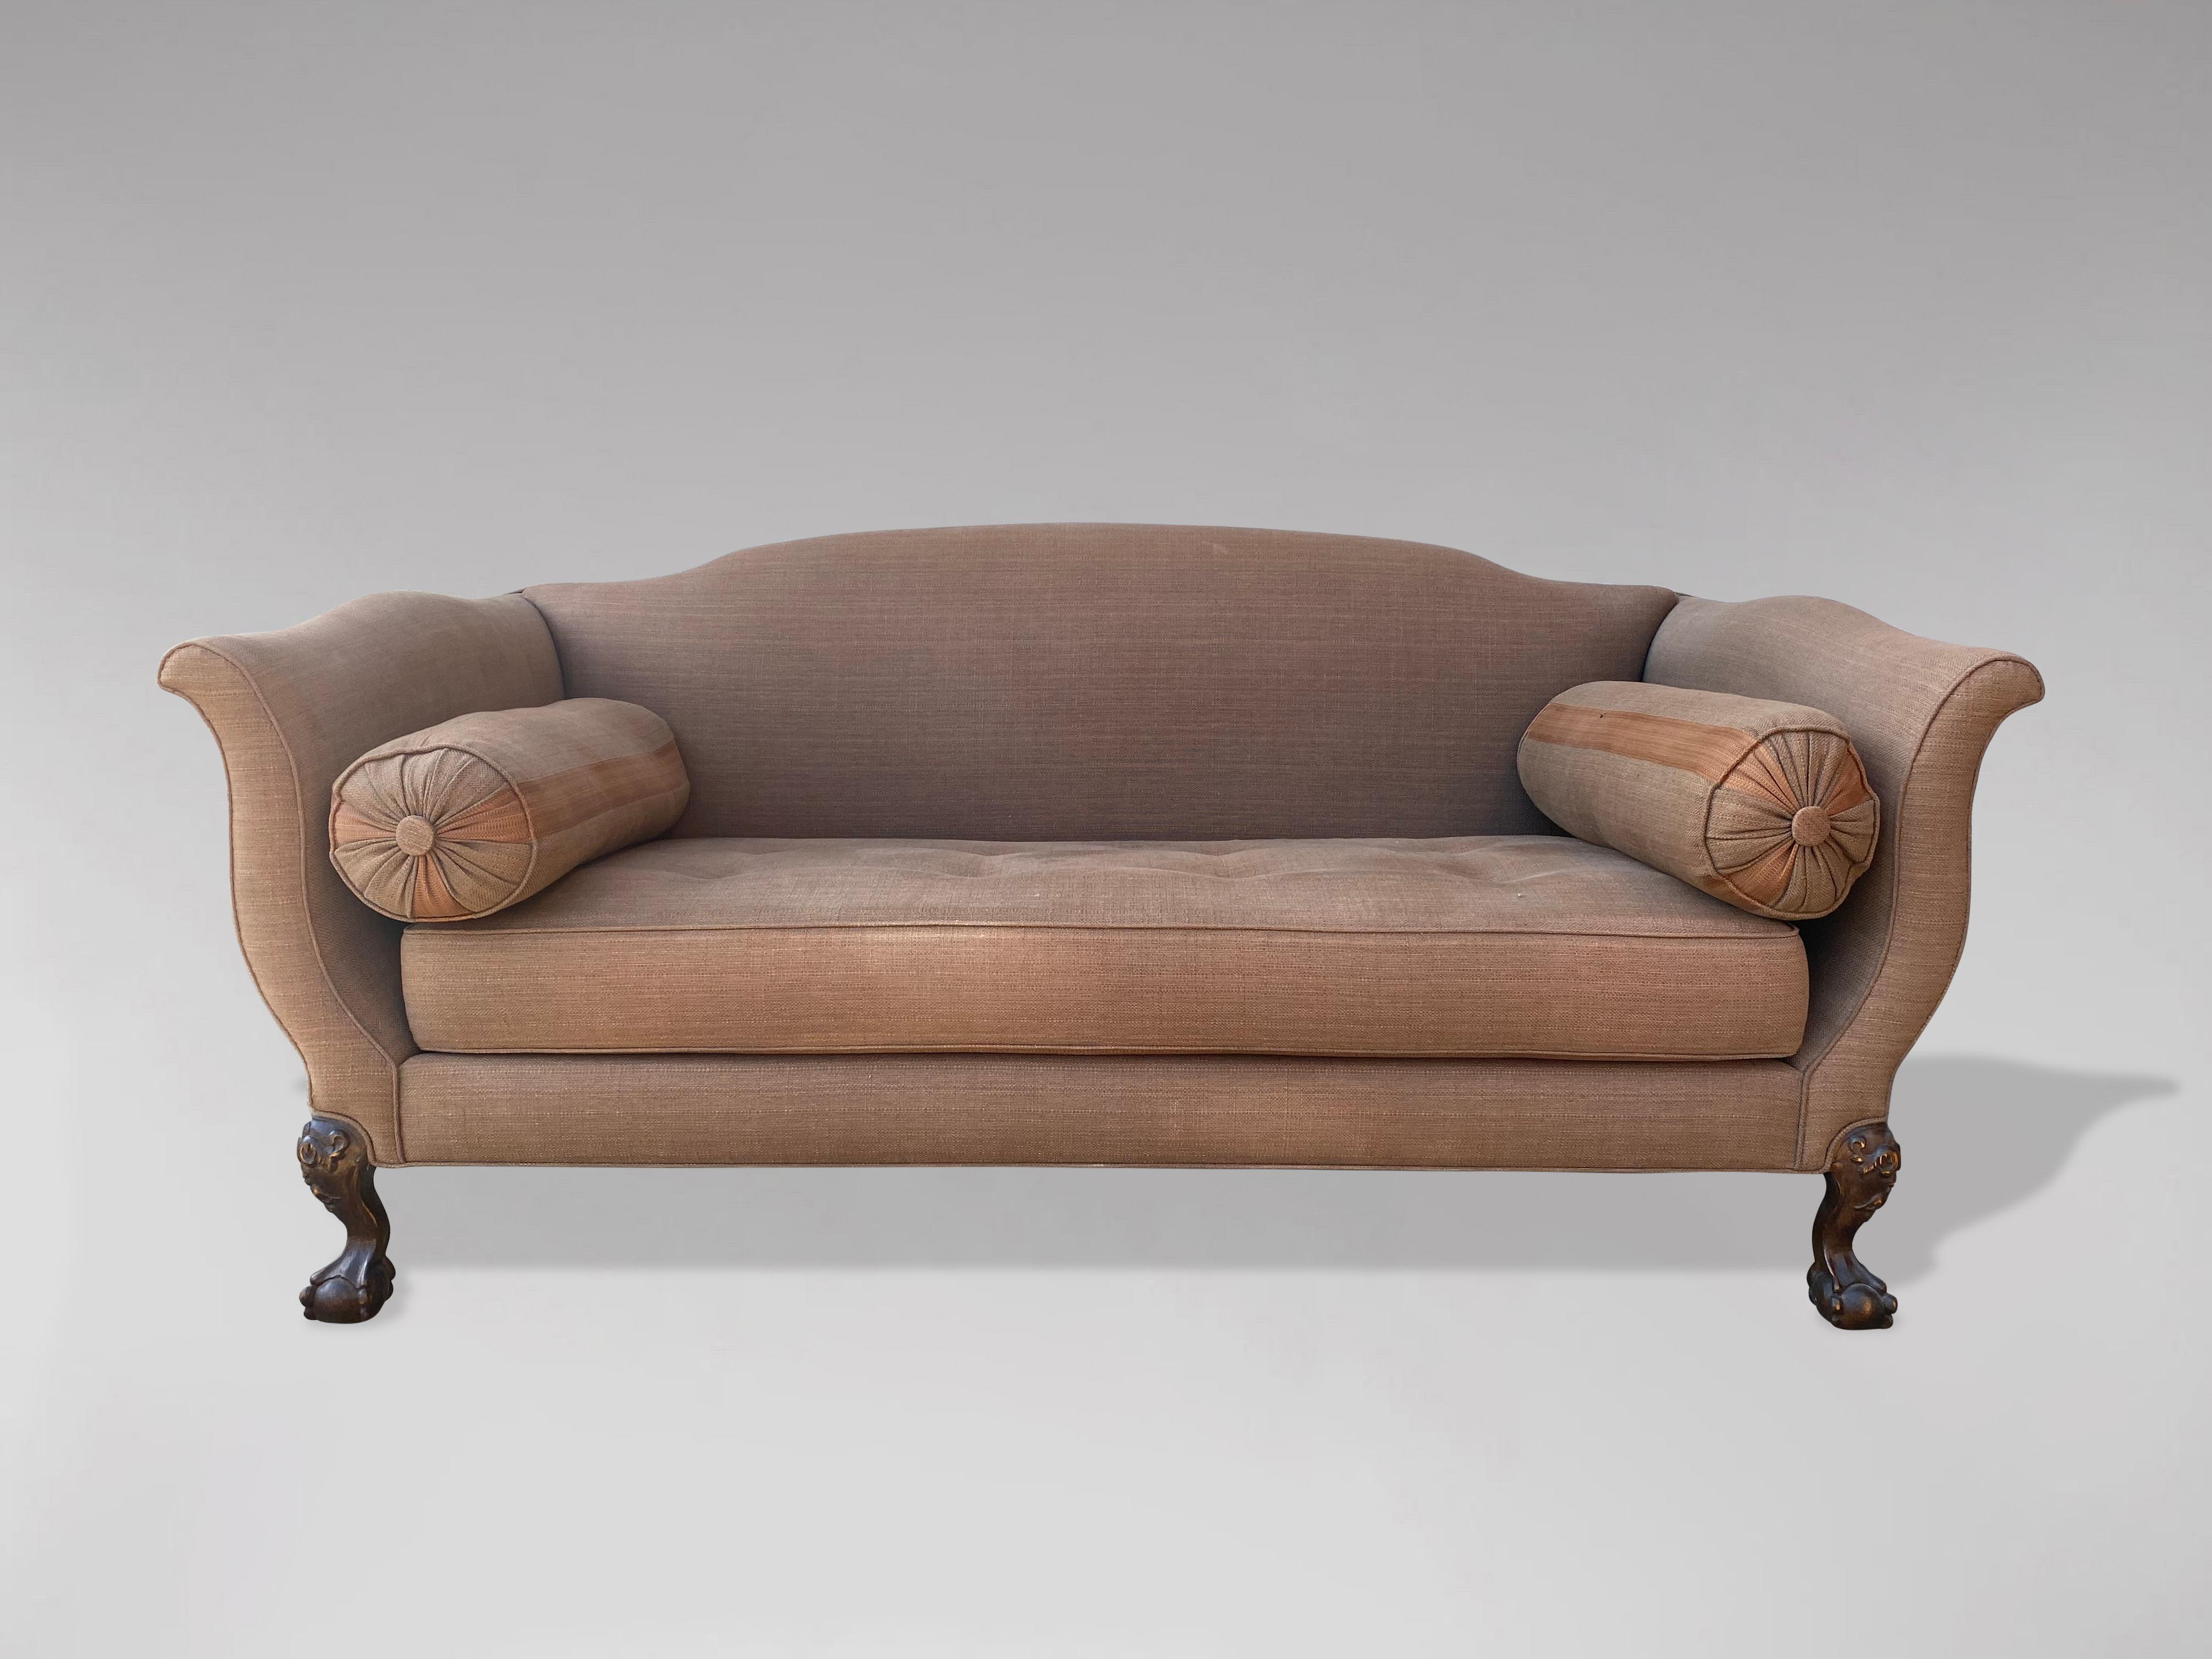 British 20th Century Edwardian Period Reupholstered Camel Back Sofa